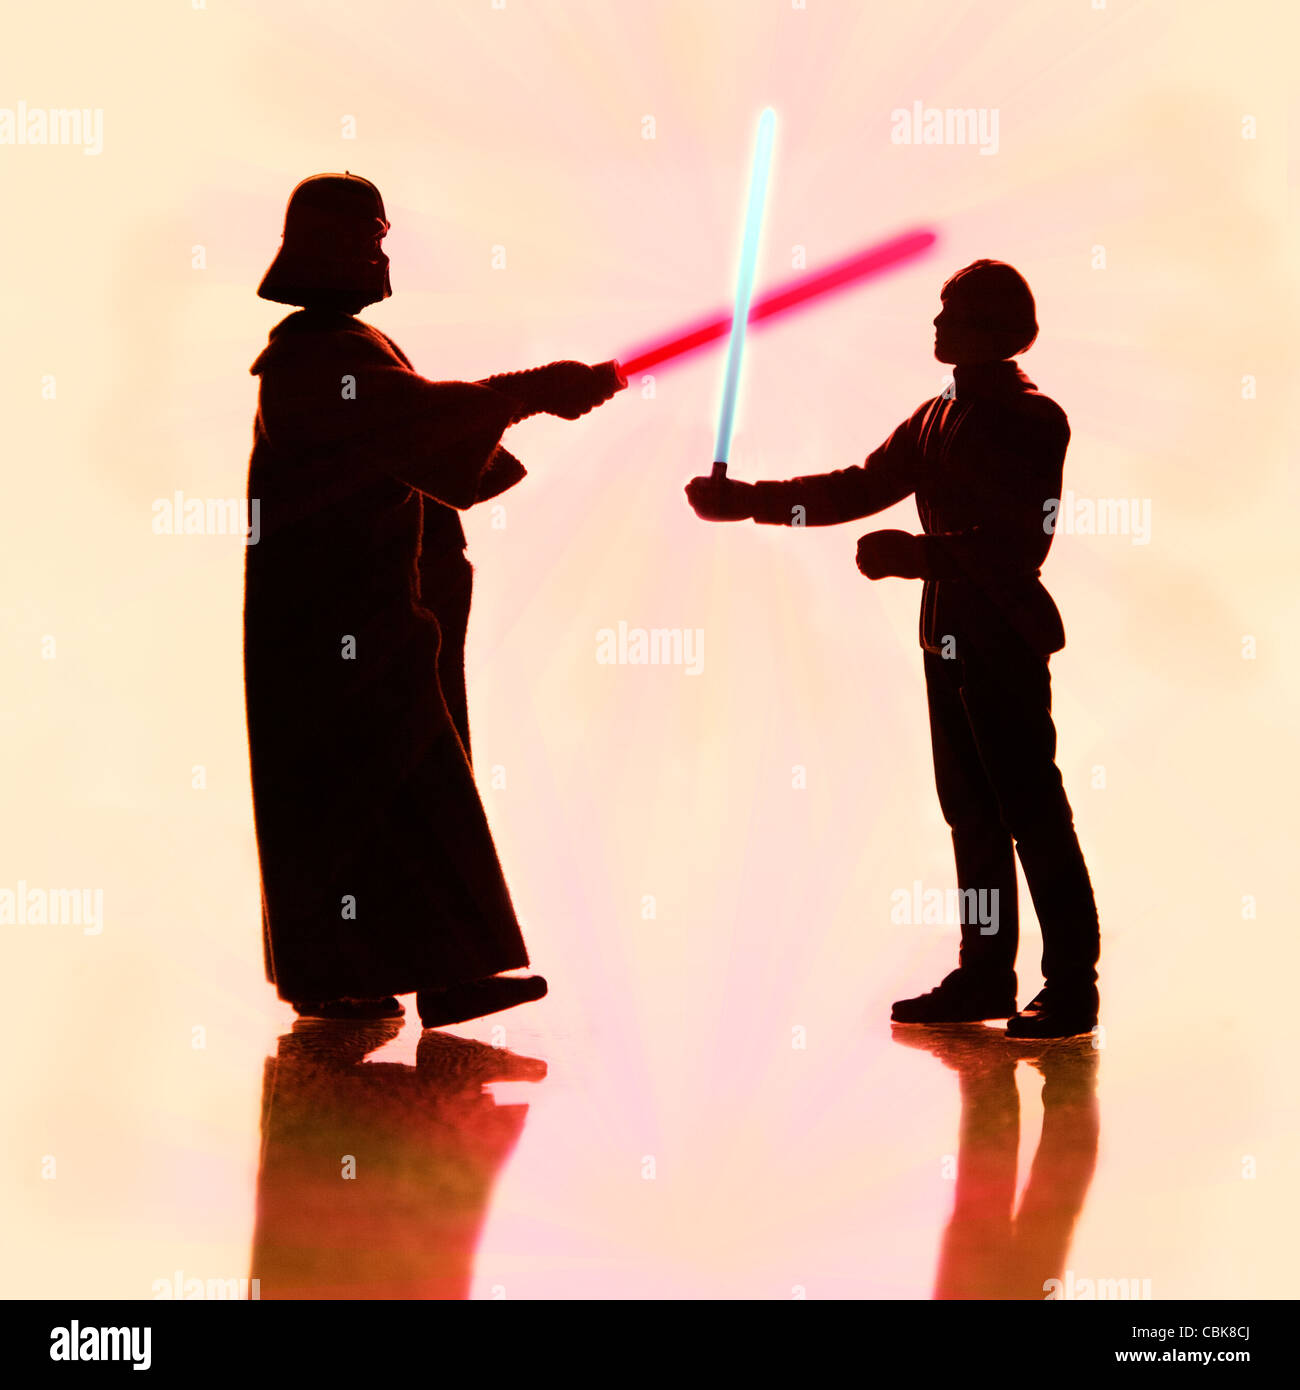 star wars lightsaber silhouette